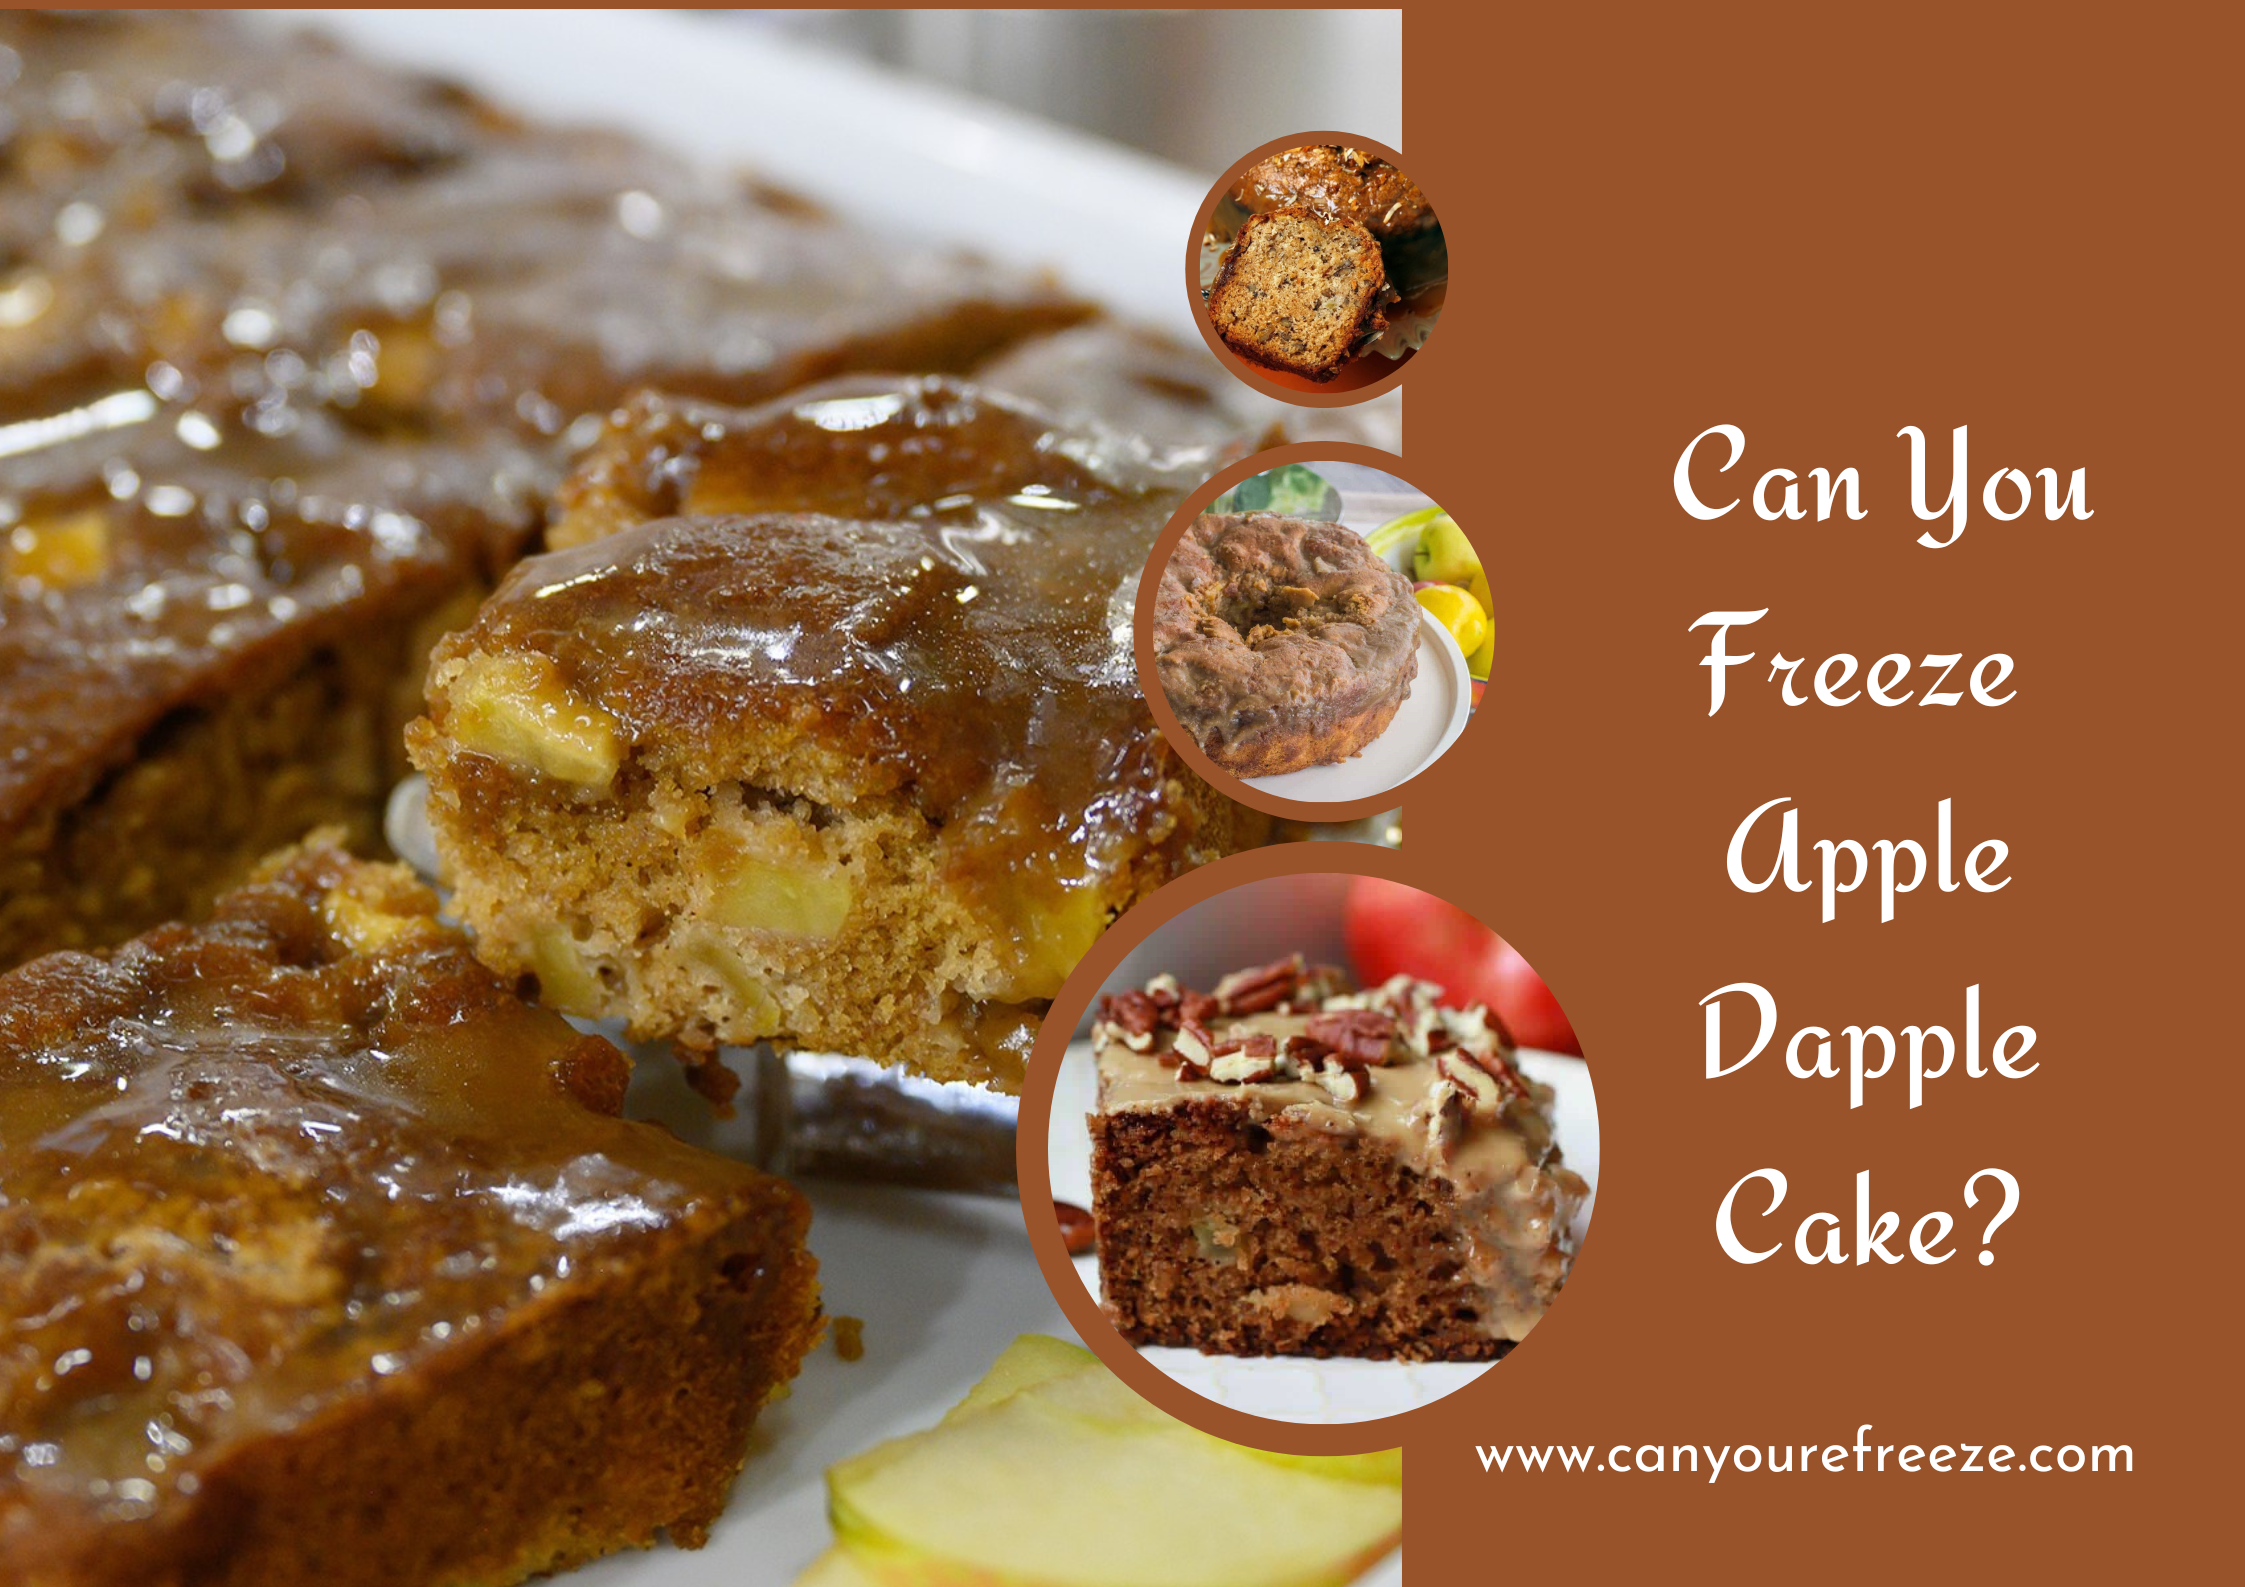 Can You Freeze Apple Dapple Cake